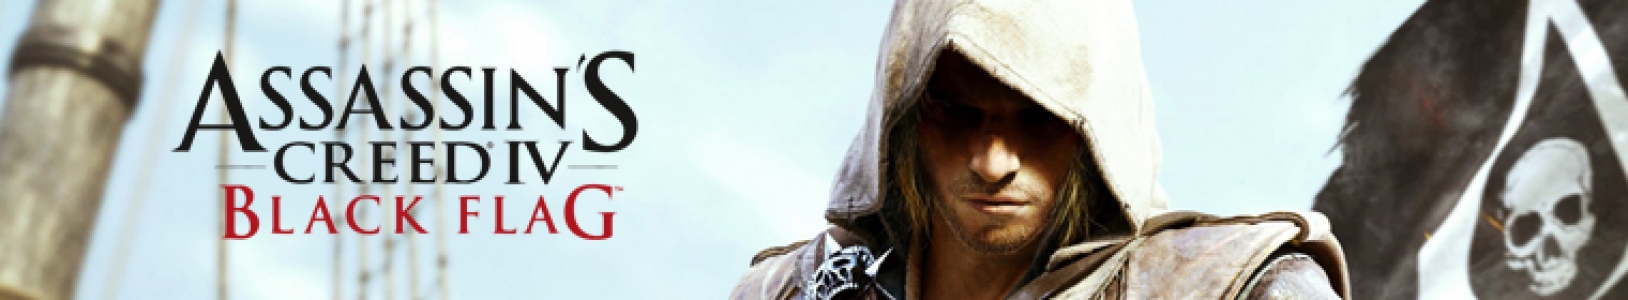 Assassin's Creed IV: Black Flag banner